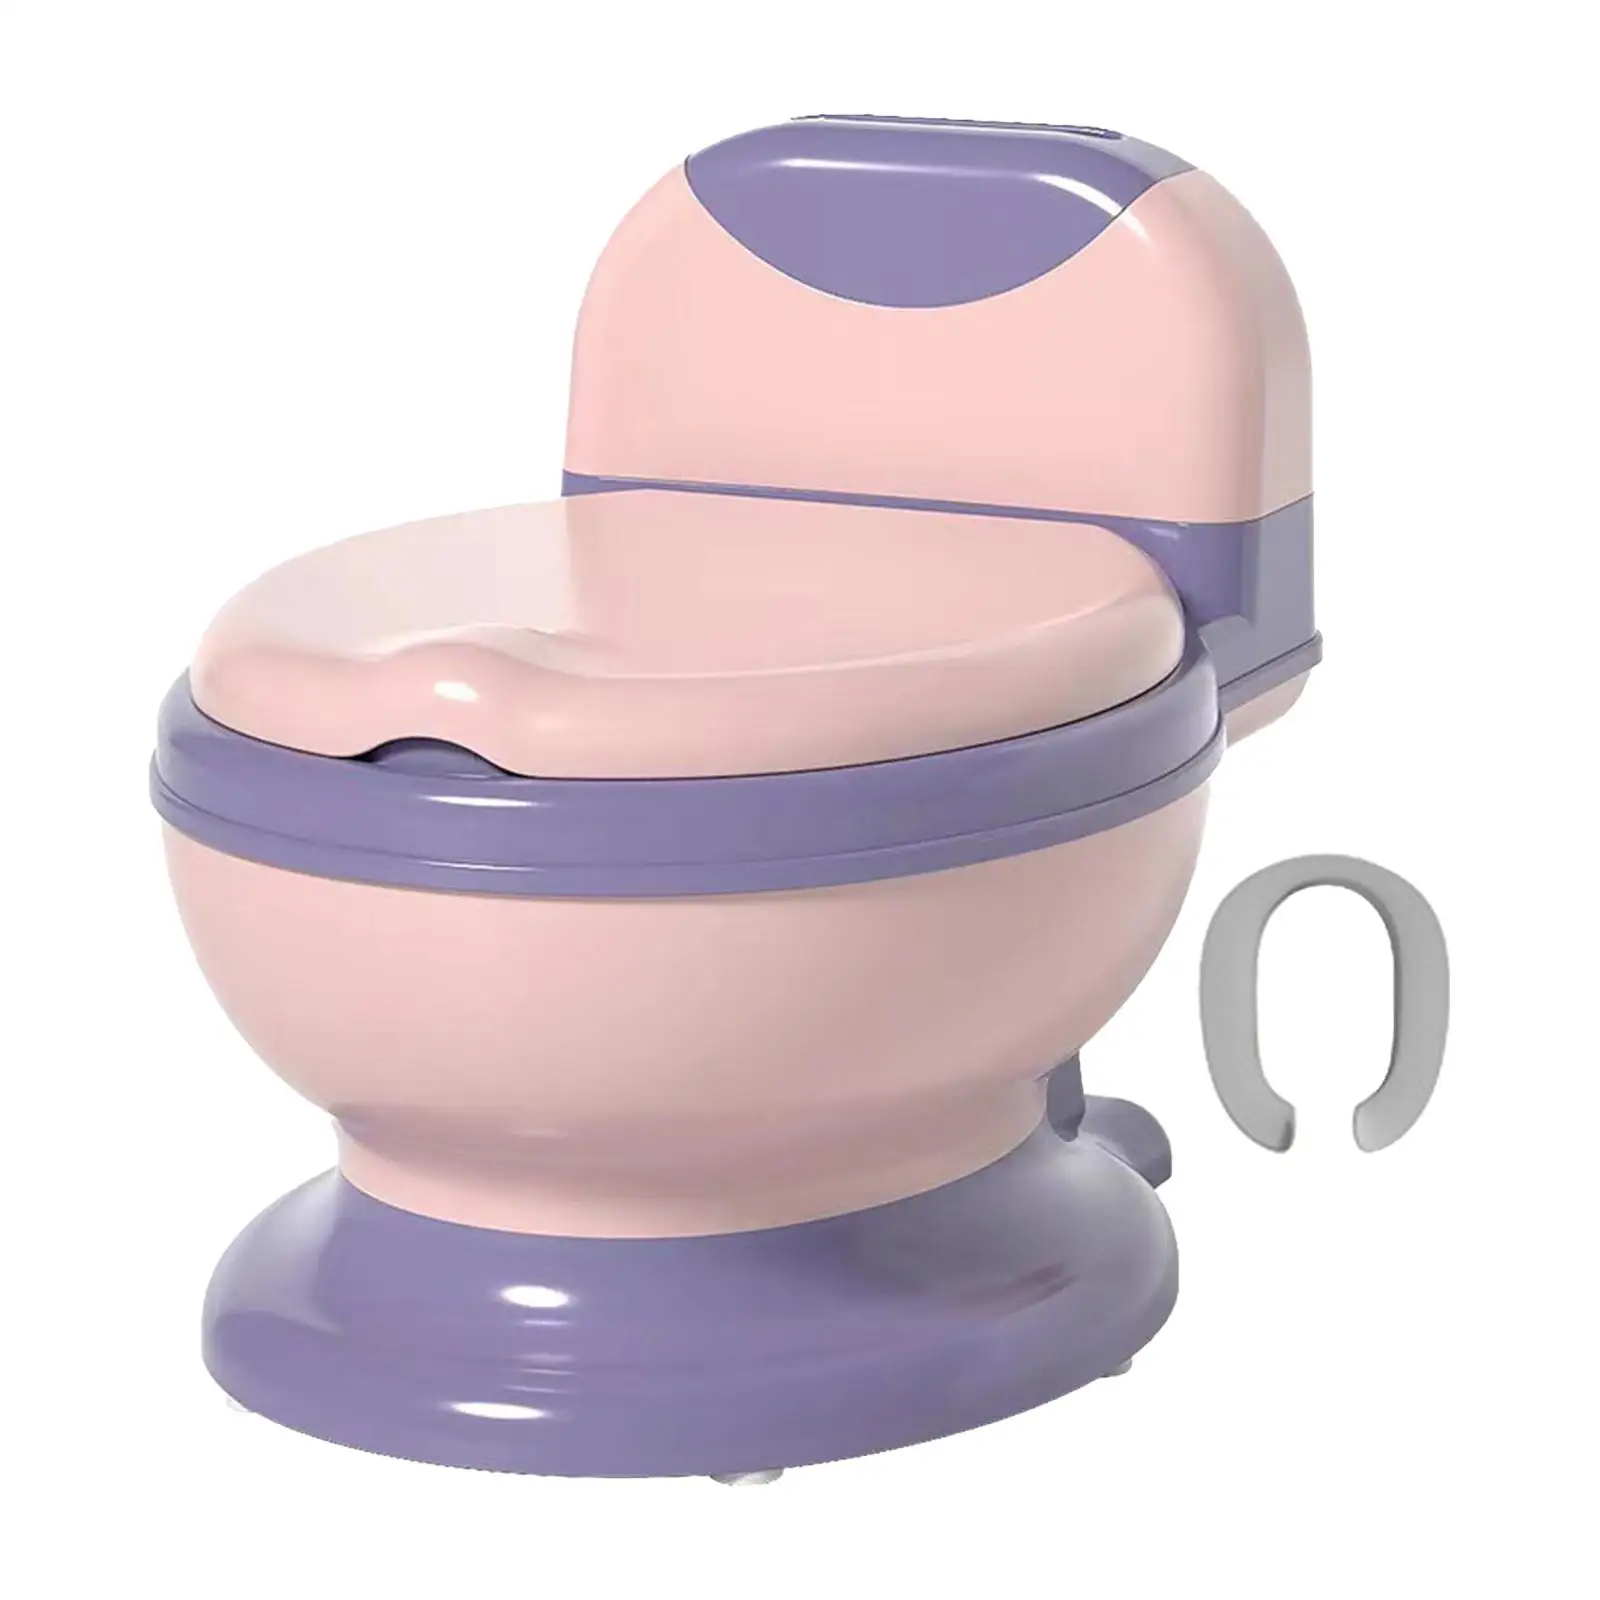 Potty Train Toilet Potty Train Seat Removable Potty Pot Real Feel Potty Realistic Toilet for Baby Girls Boys Kids Children